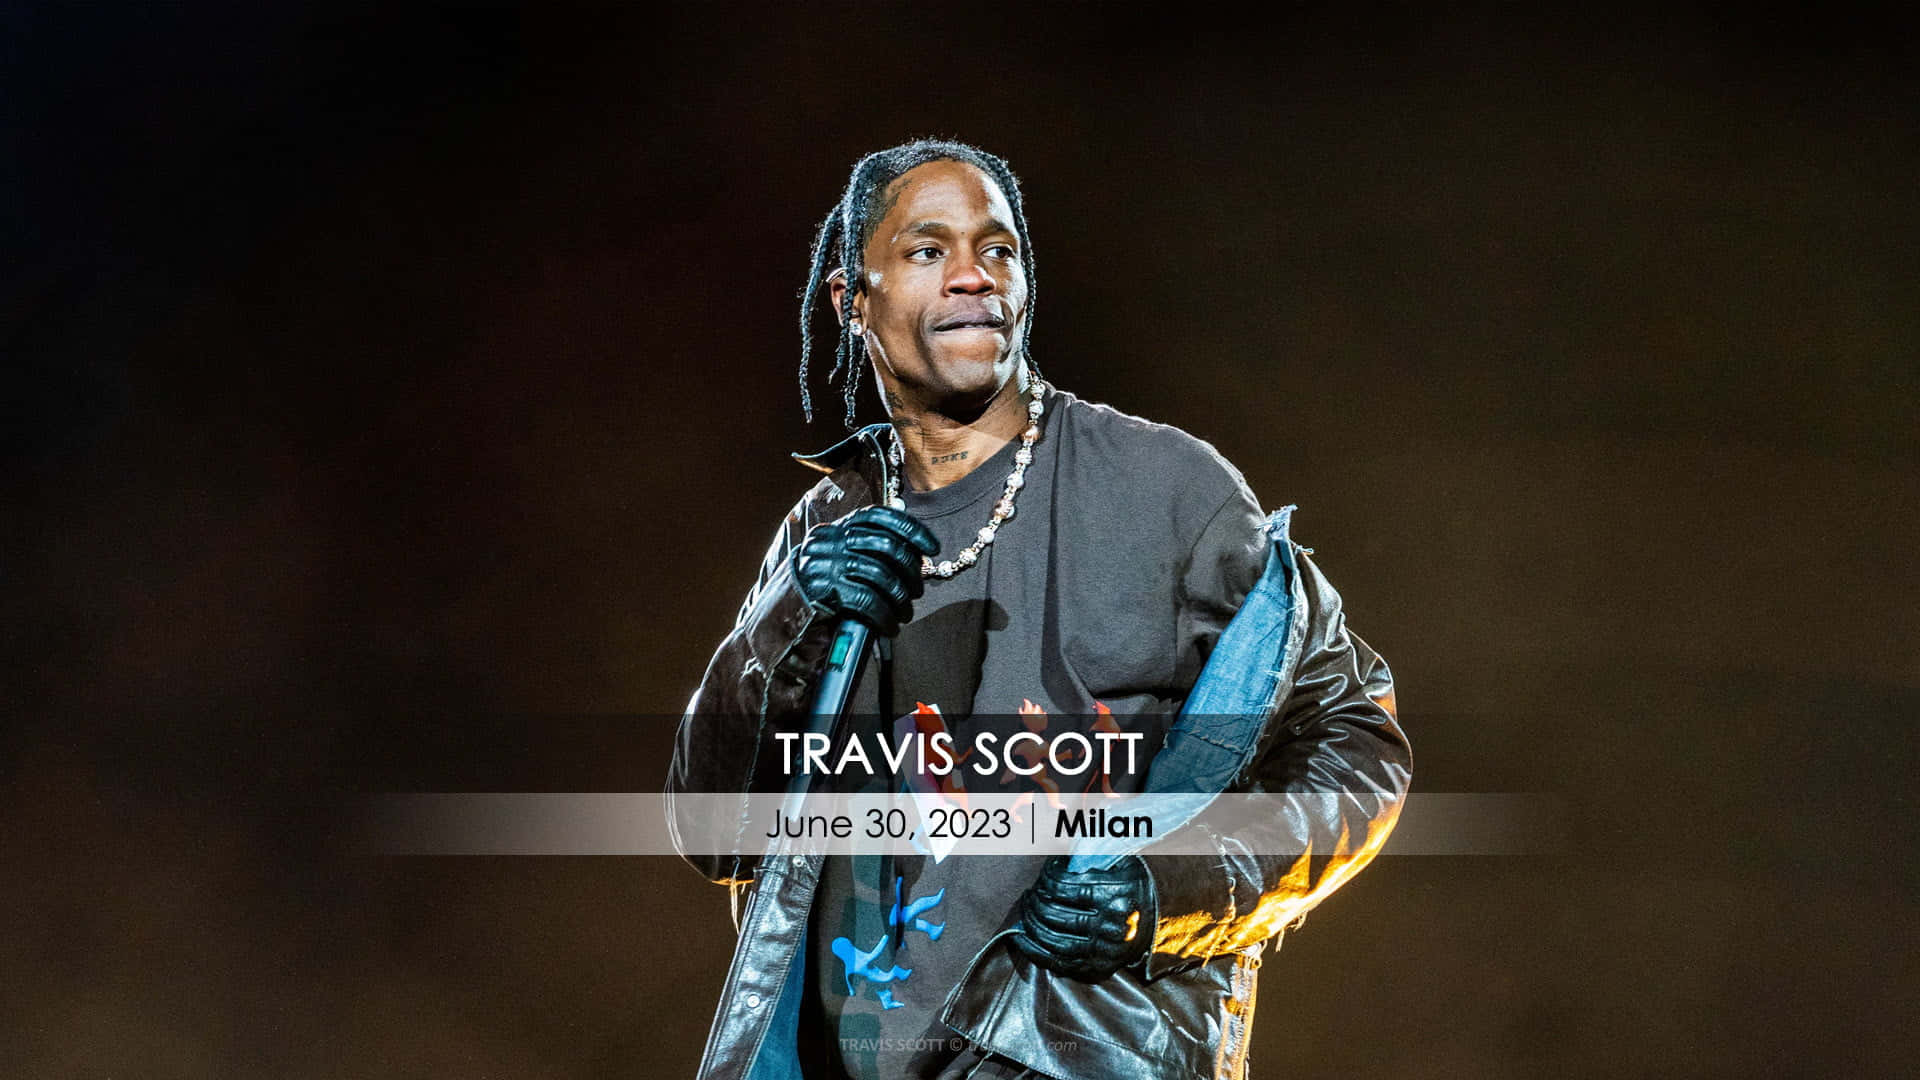 Influential hip-hop artist Travis Scott